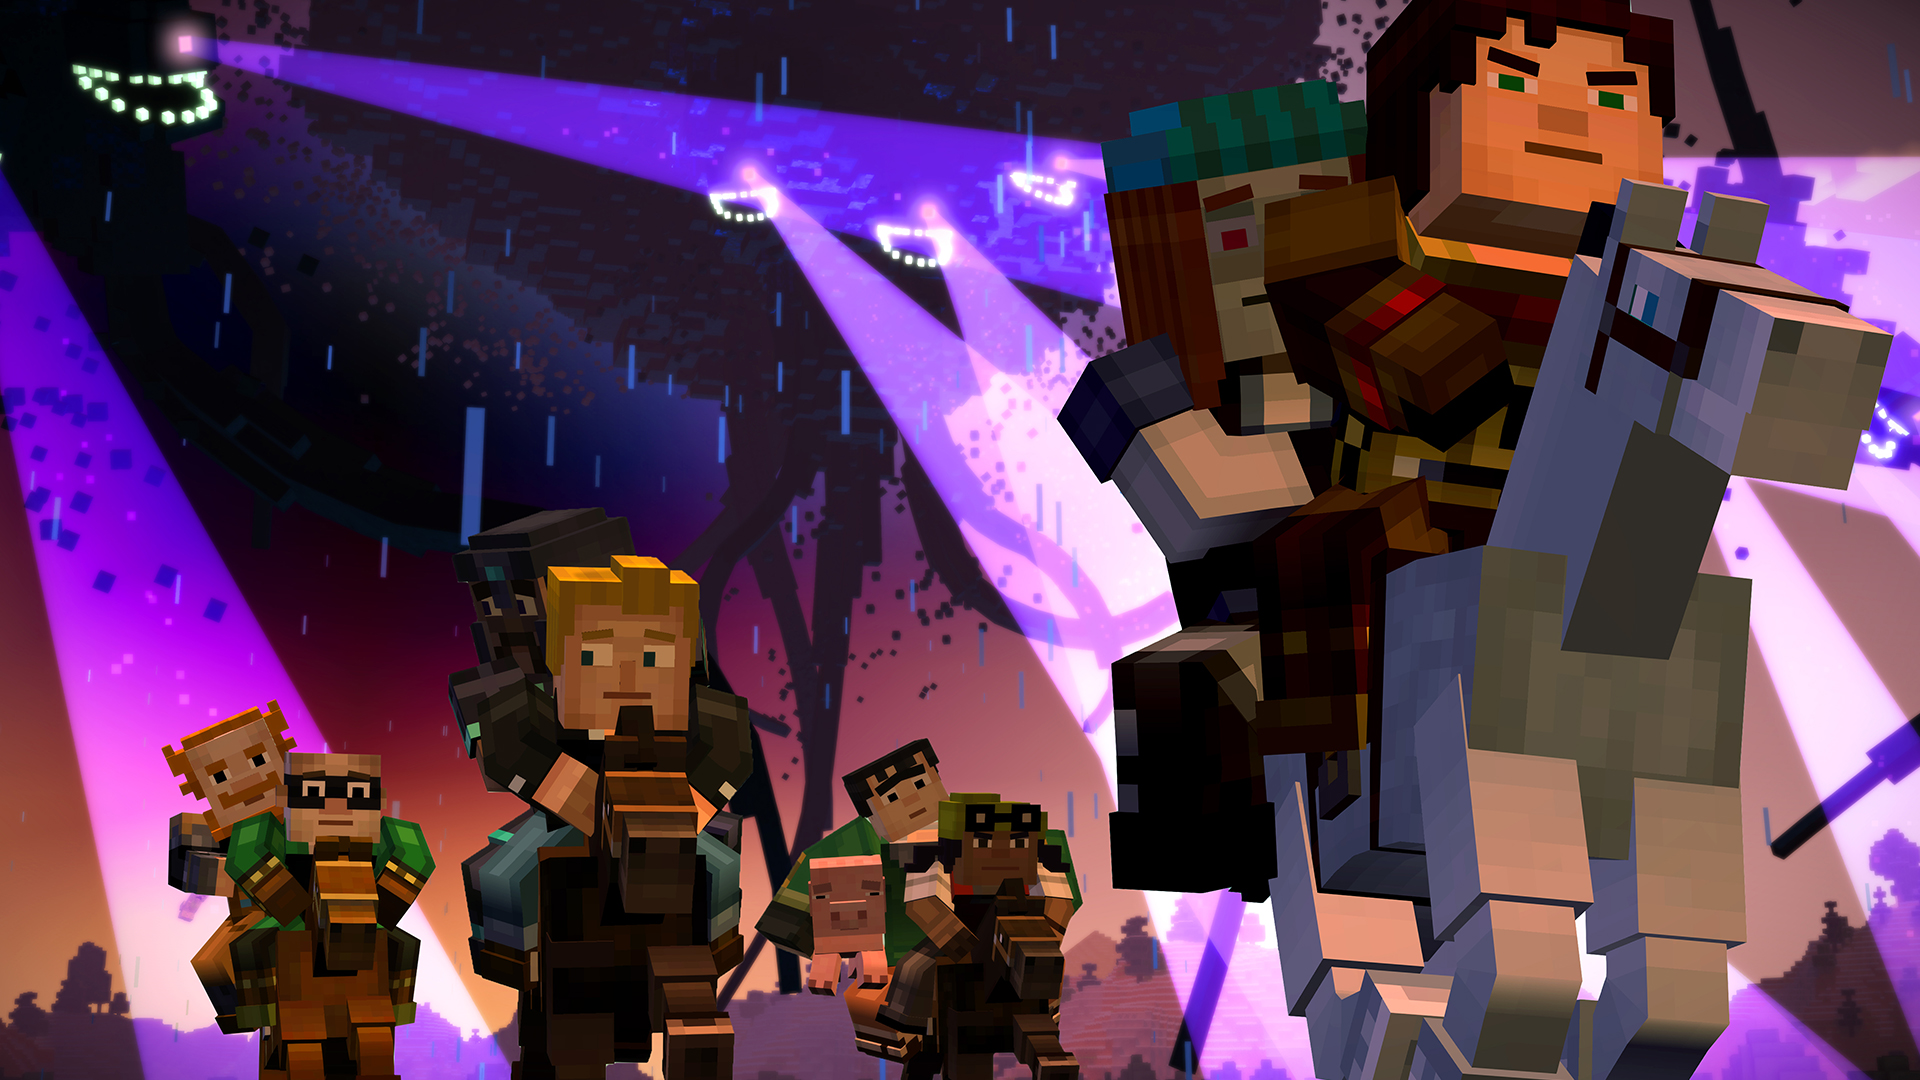 Minecraft: Story Mode Free Download - GameTrex